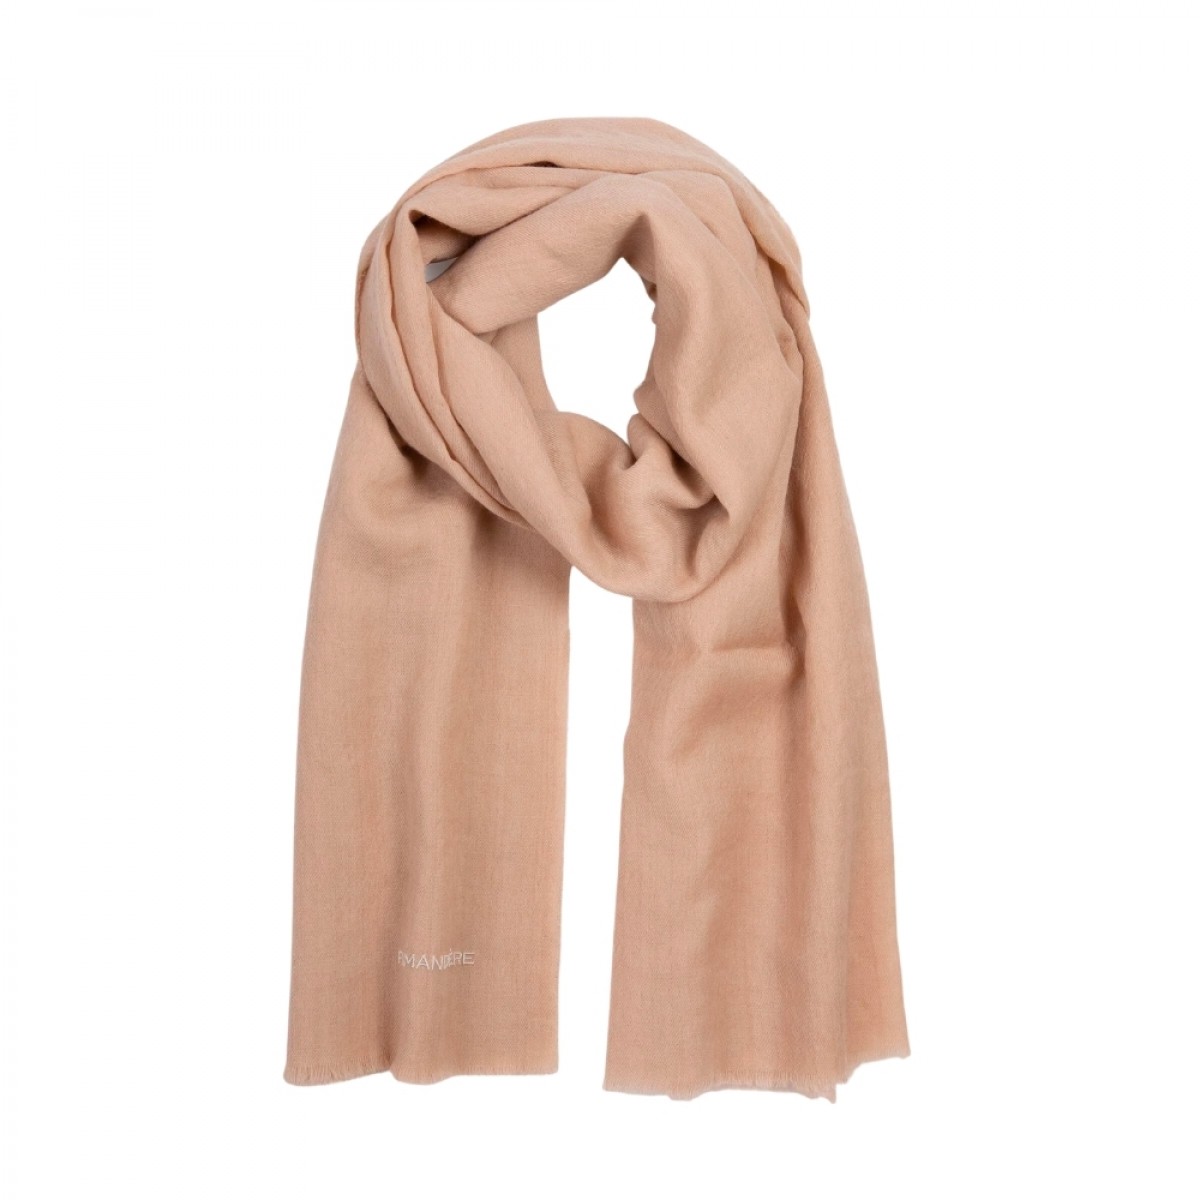 pomandere scarf - rose - front